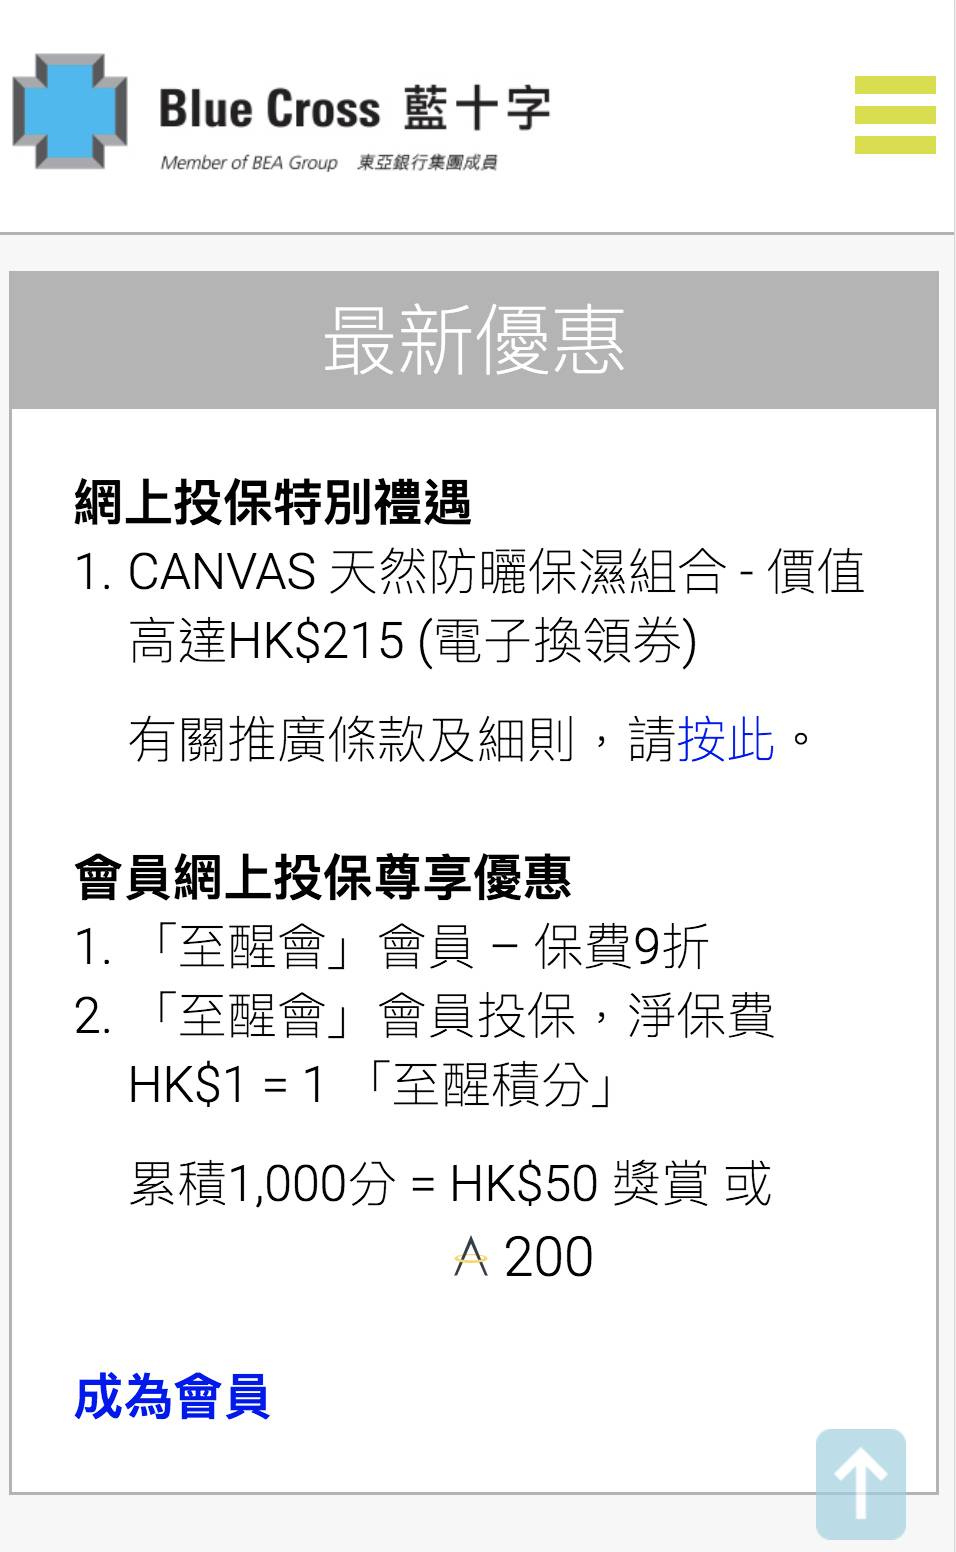 Asia Miles 藍十字累積 1,000 分即可兌換為200里，即 HK/里。